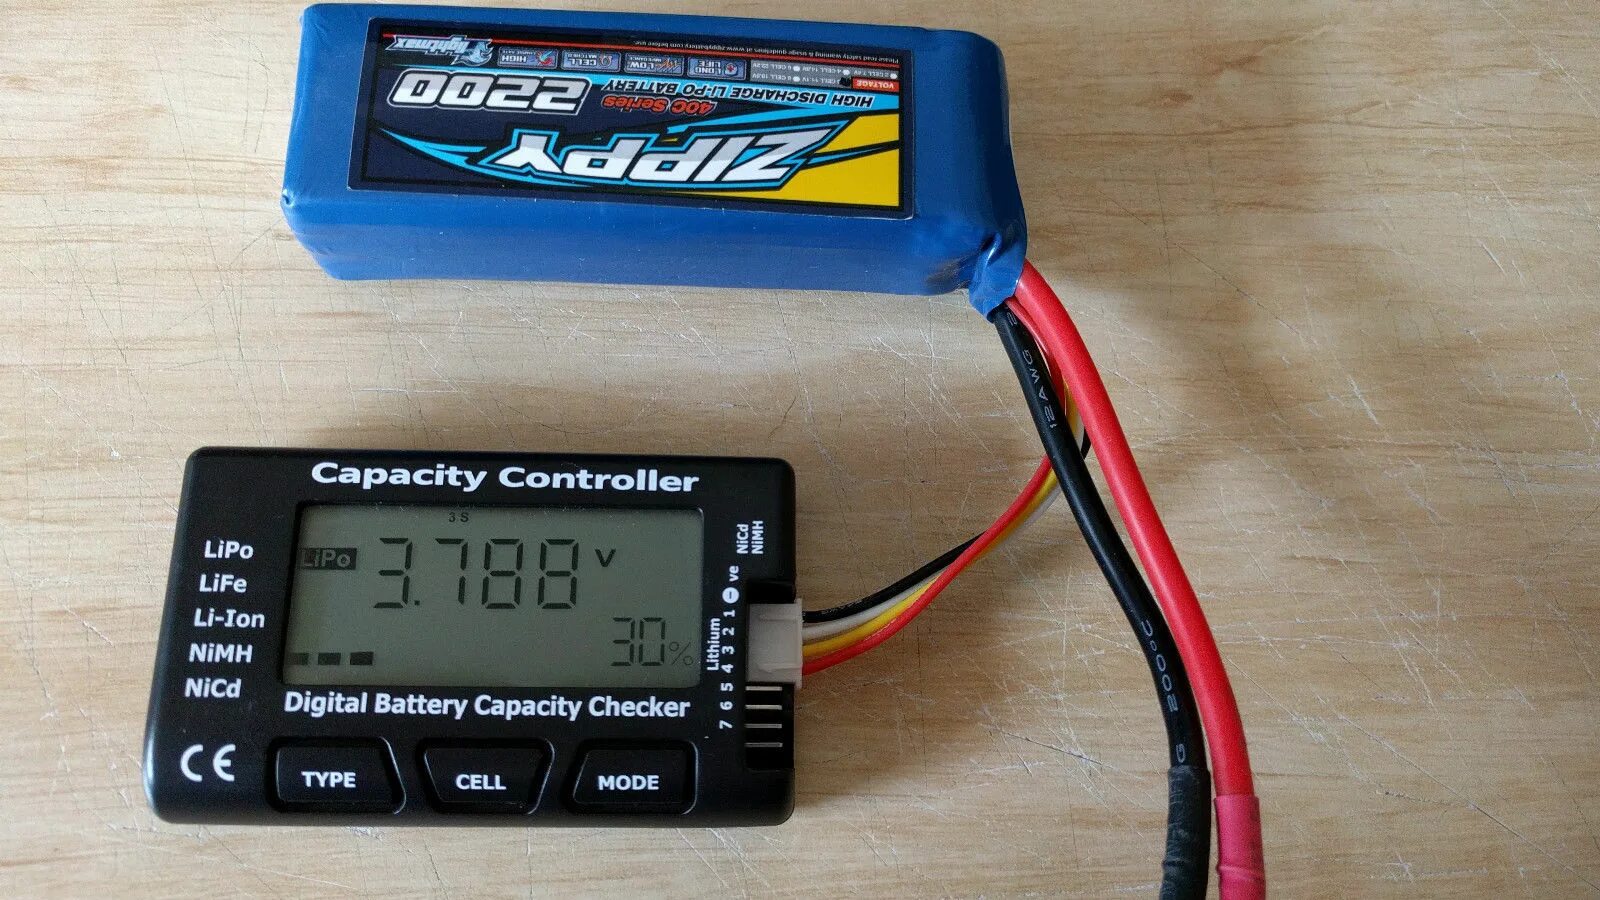 Battery capacity voltage. Контроллер тестер. Батарея тестер для проверки емкости Lipo Life li-ion NIMH NICD. Battery Controller Tester. Липо метр.